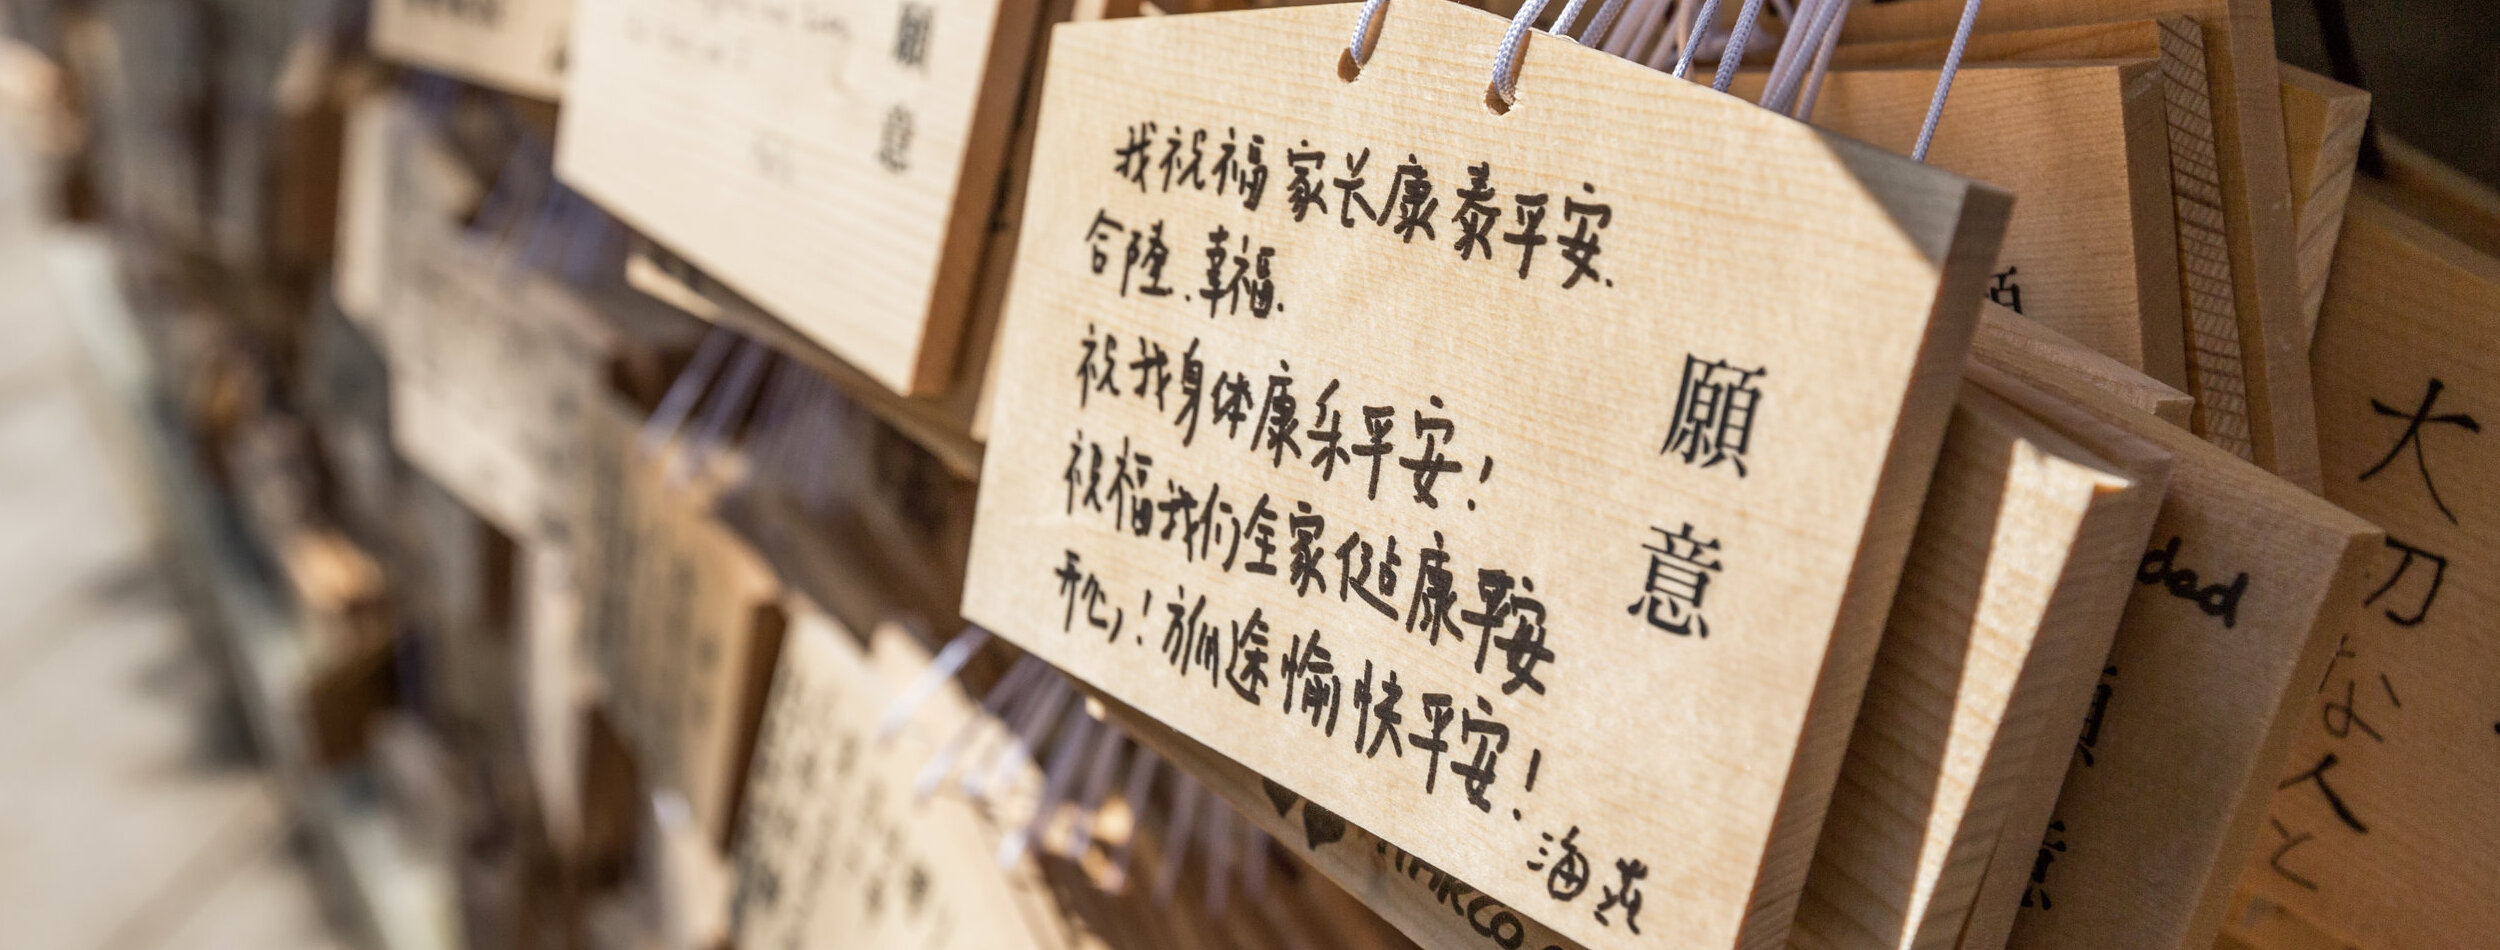 TOKYO, JAPAN - AUGUST 16TH 2015. Prayers written on wooden card called ema in Japanese language at the Meiji Shinto Shrine, Shibuya, Japan.